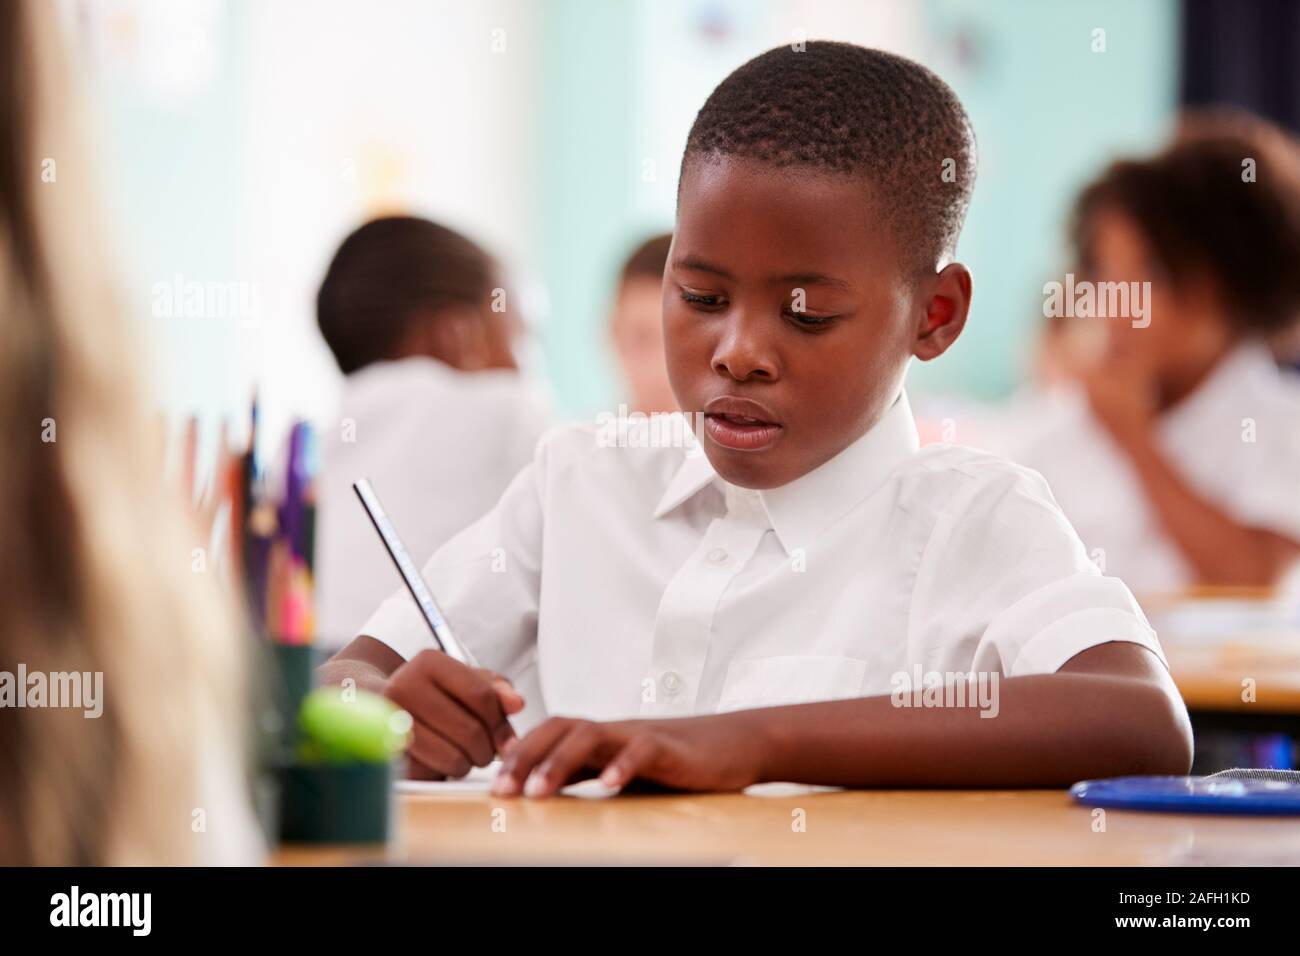 Male Elementary School Pupil Wearing Uniform Working At Desk Stock Photo